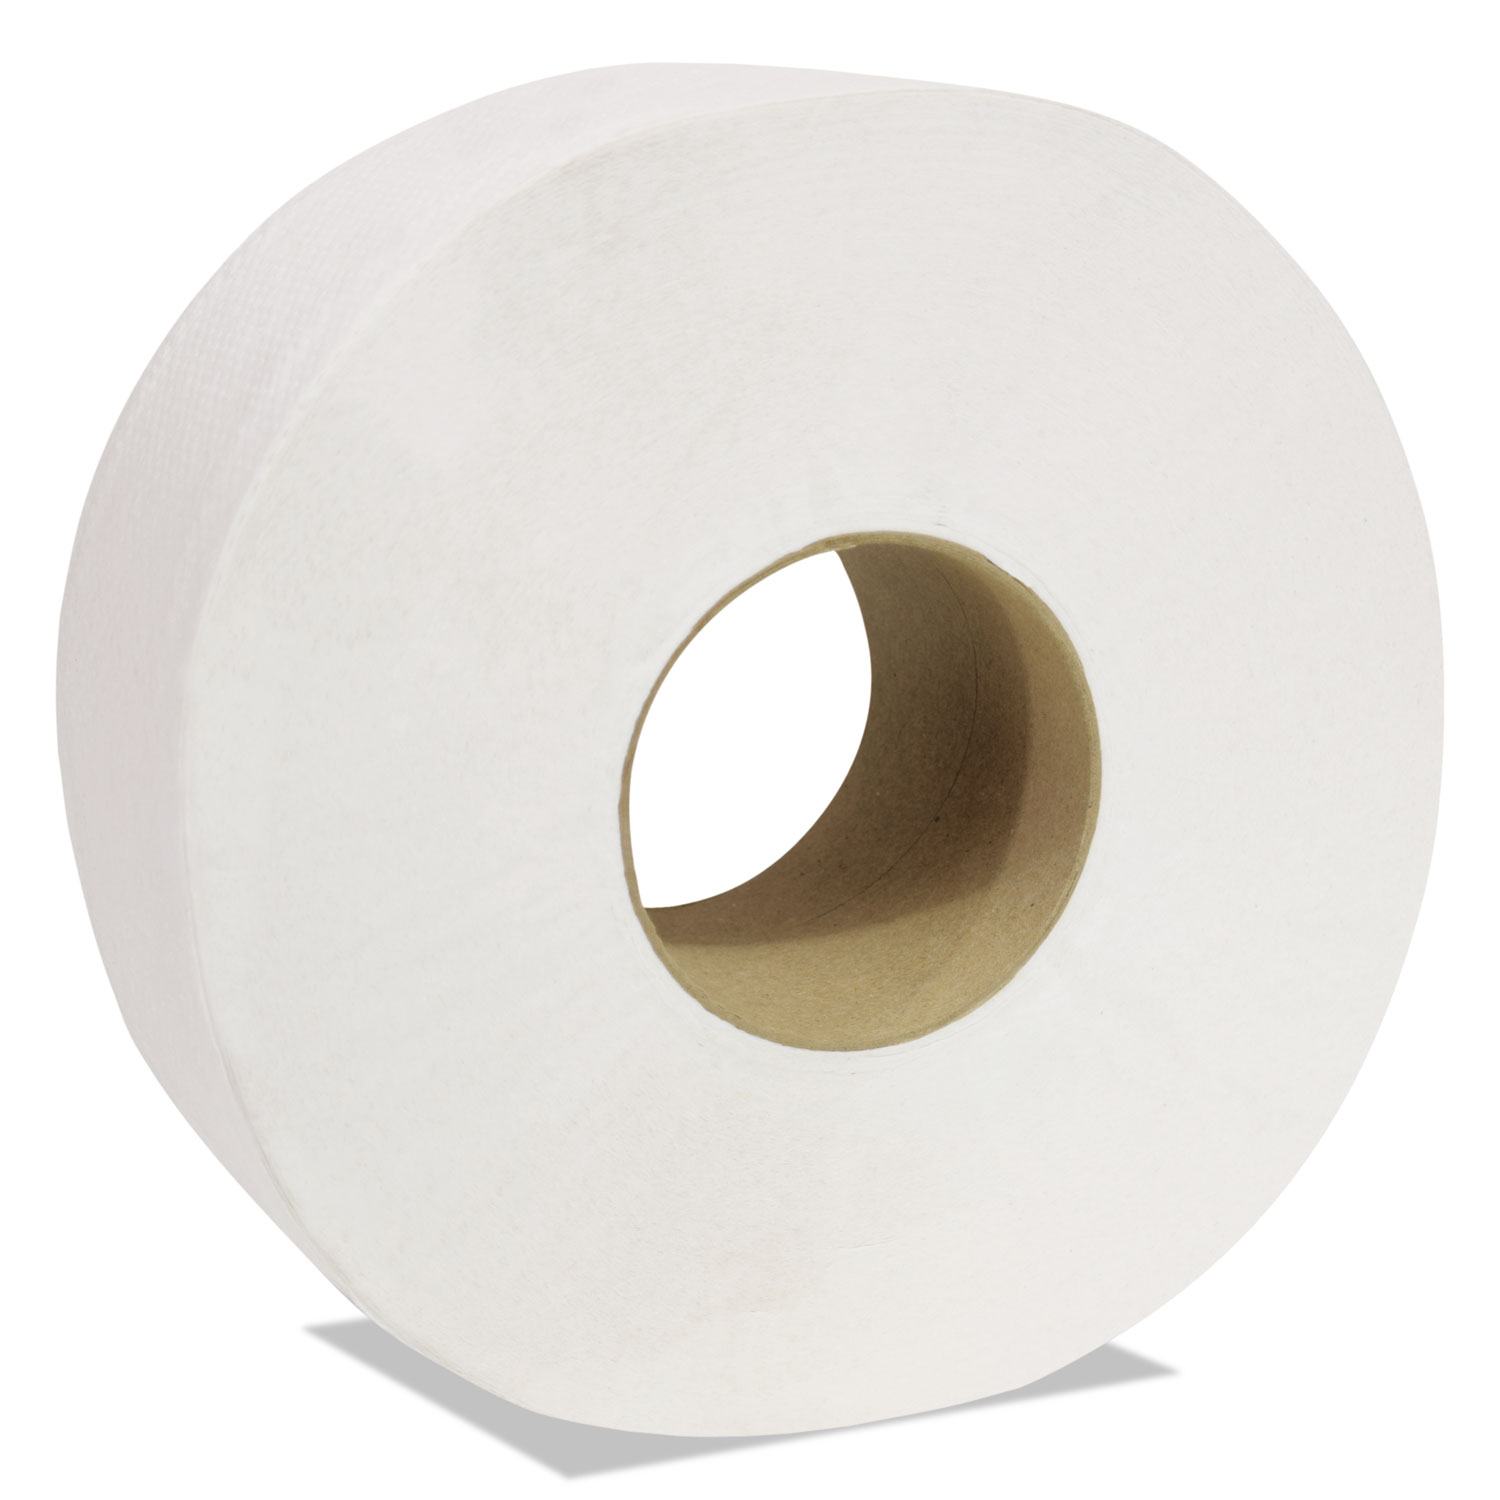  Cascades PRO B220 Decor Jumbo Roll Jr. Tissue, 2-Ply, White, 3 1/2 x 750 ft, 12 Rolls/Carton (CSDB220) 